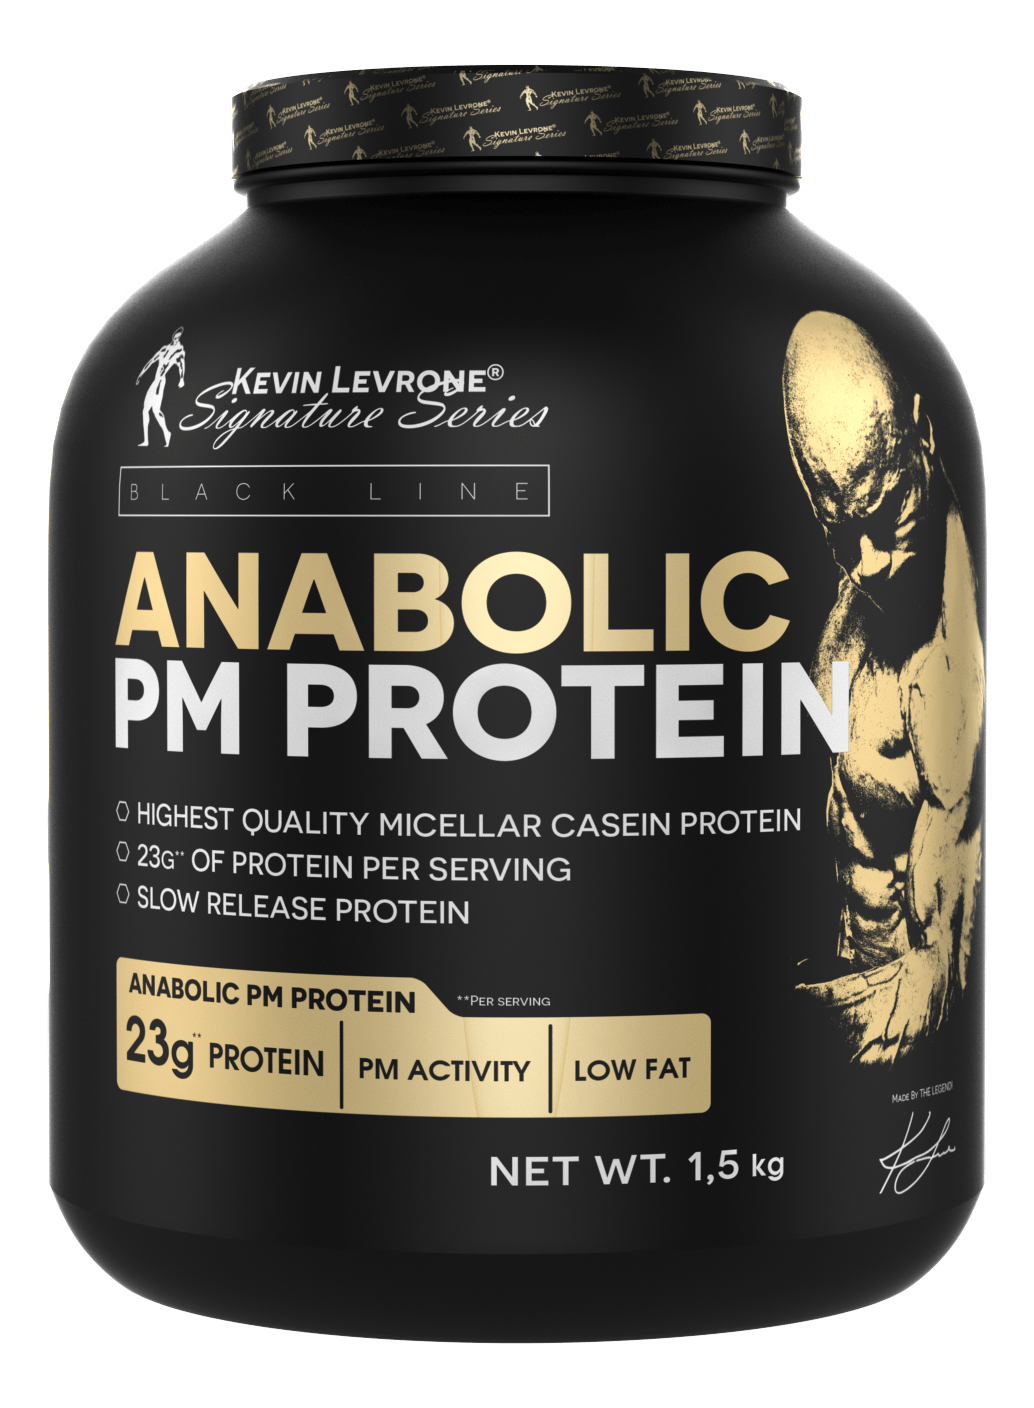 Протеин Kevin Levrone Anabolic PM Protein, 1.5 кг Ваниль СРОК 04.21,  ml, Kevin Levrone. Protein. Mass Gain recovery Anti-catabolic properties 